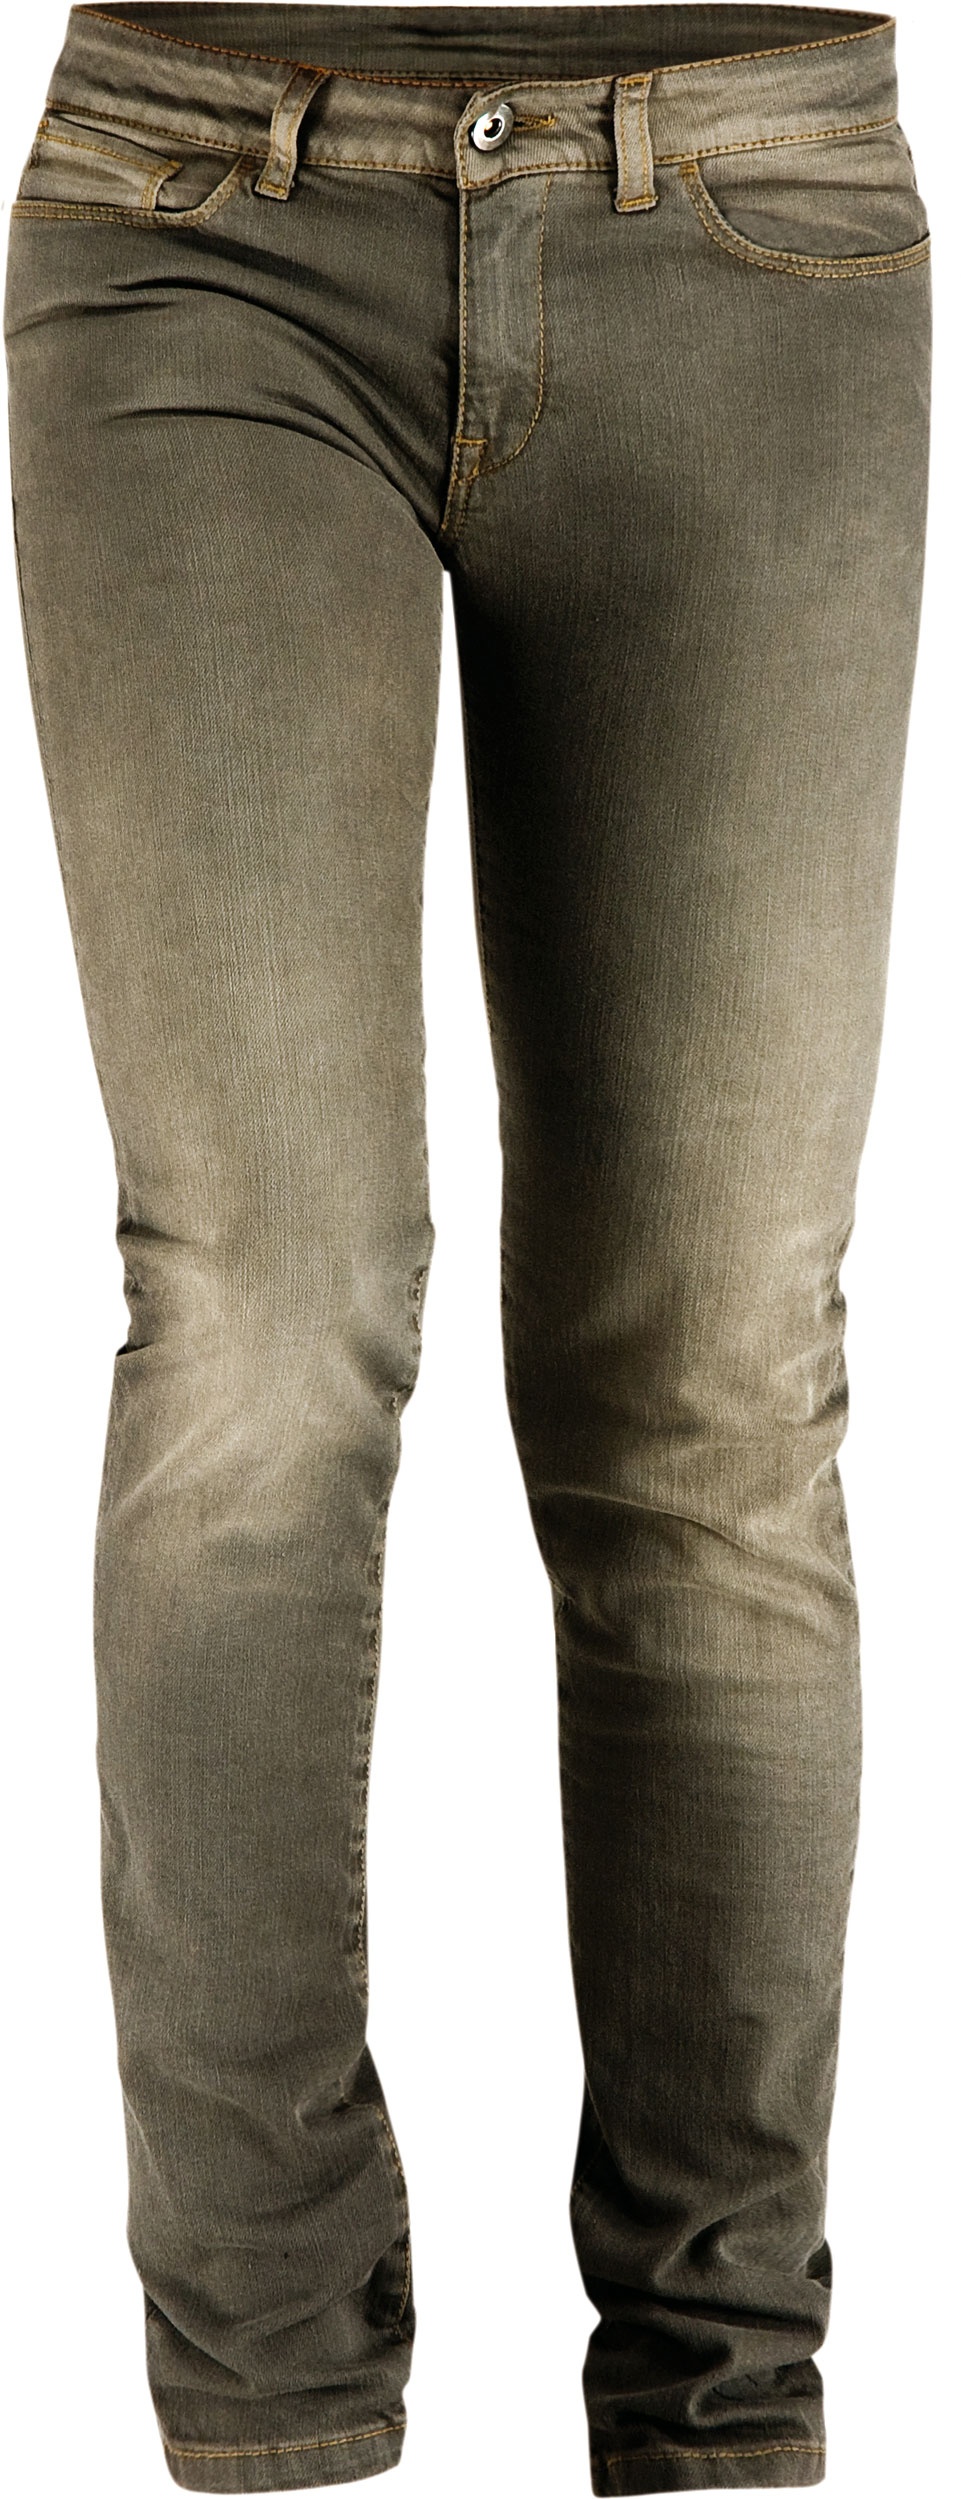 Acerbis Pasadena, Femmes jeans - Gris - 25